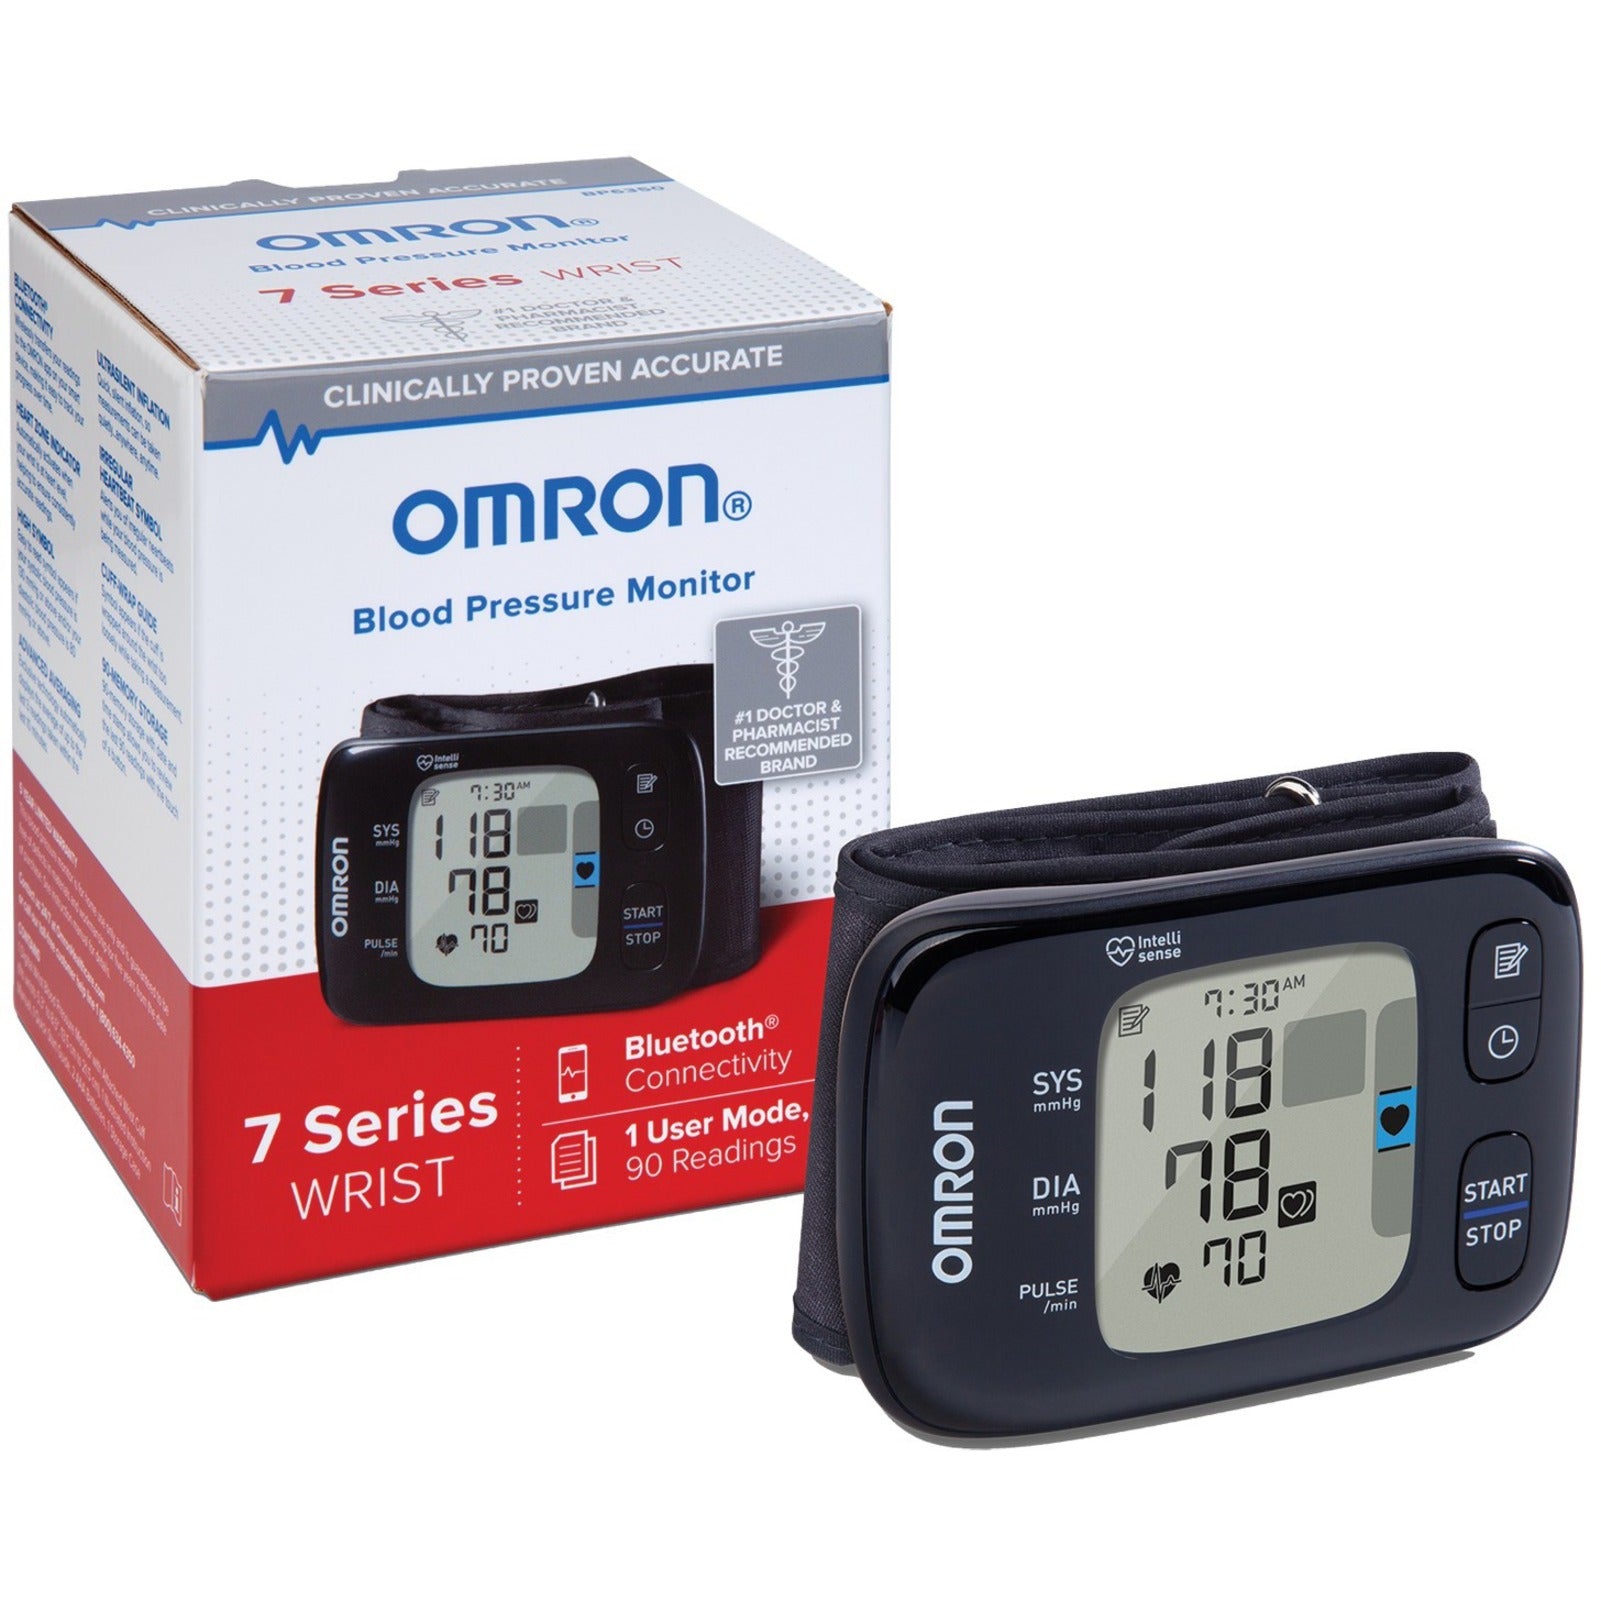 Omron BP6350 7 Series Wireless Wrist Blood Pressure Monitor, Memory Storage, Irregular Heartbeat Detection, Hypertension Indicator, Bluetooth Connectivity